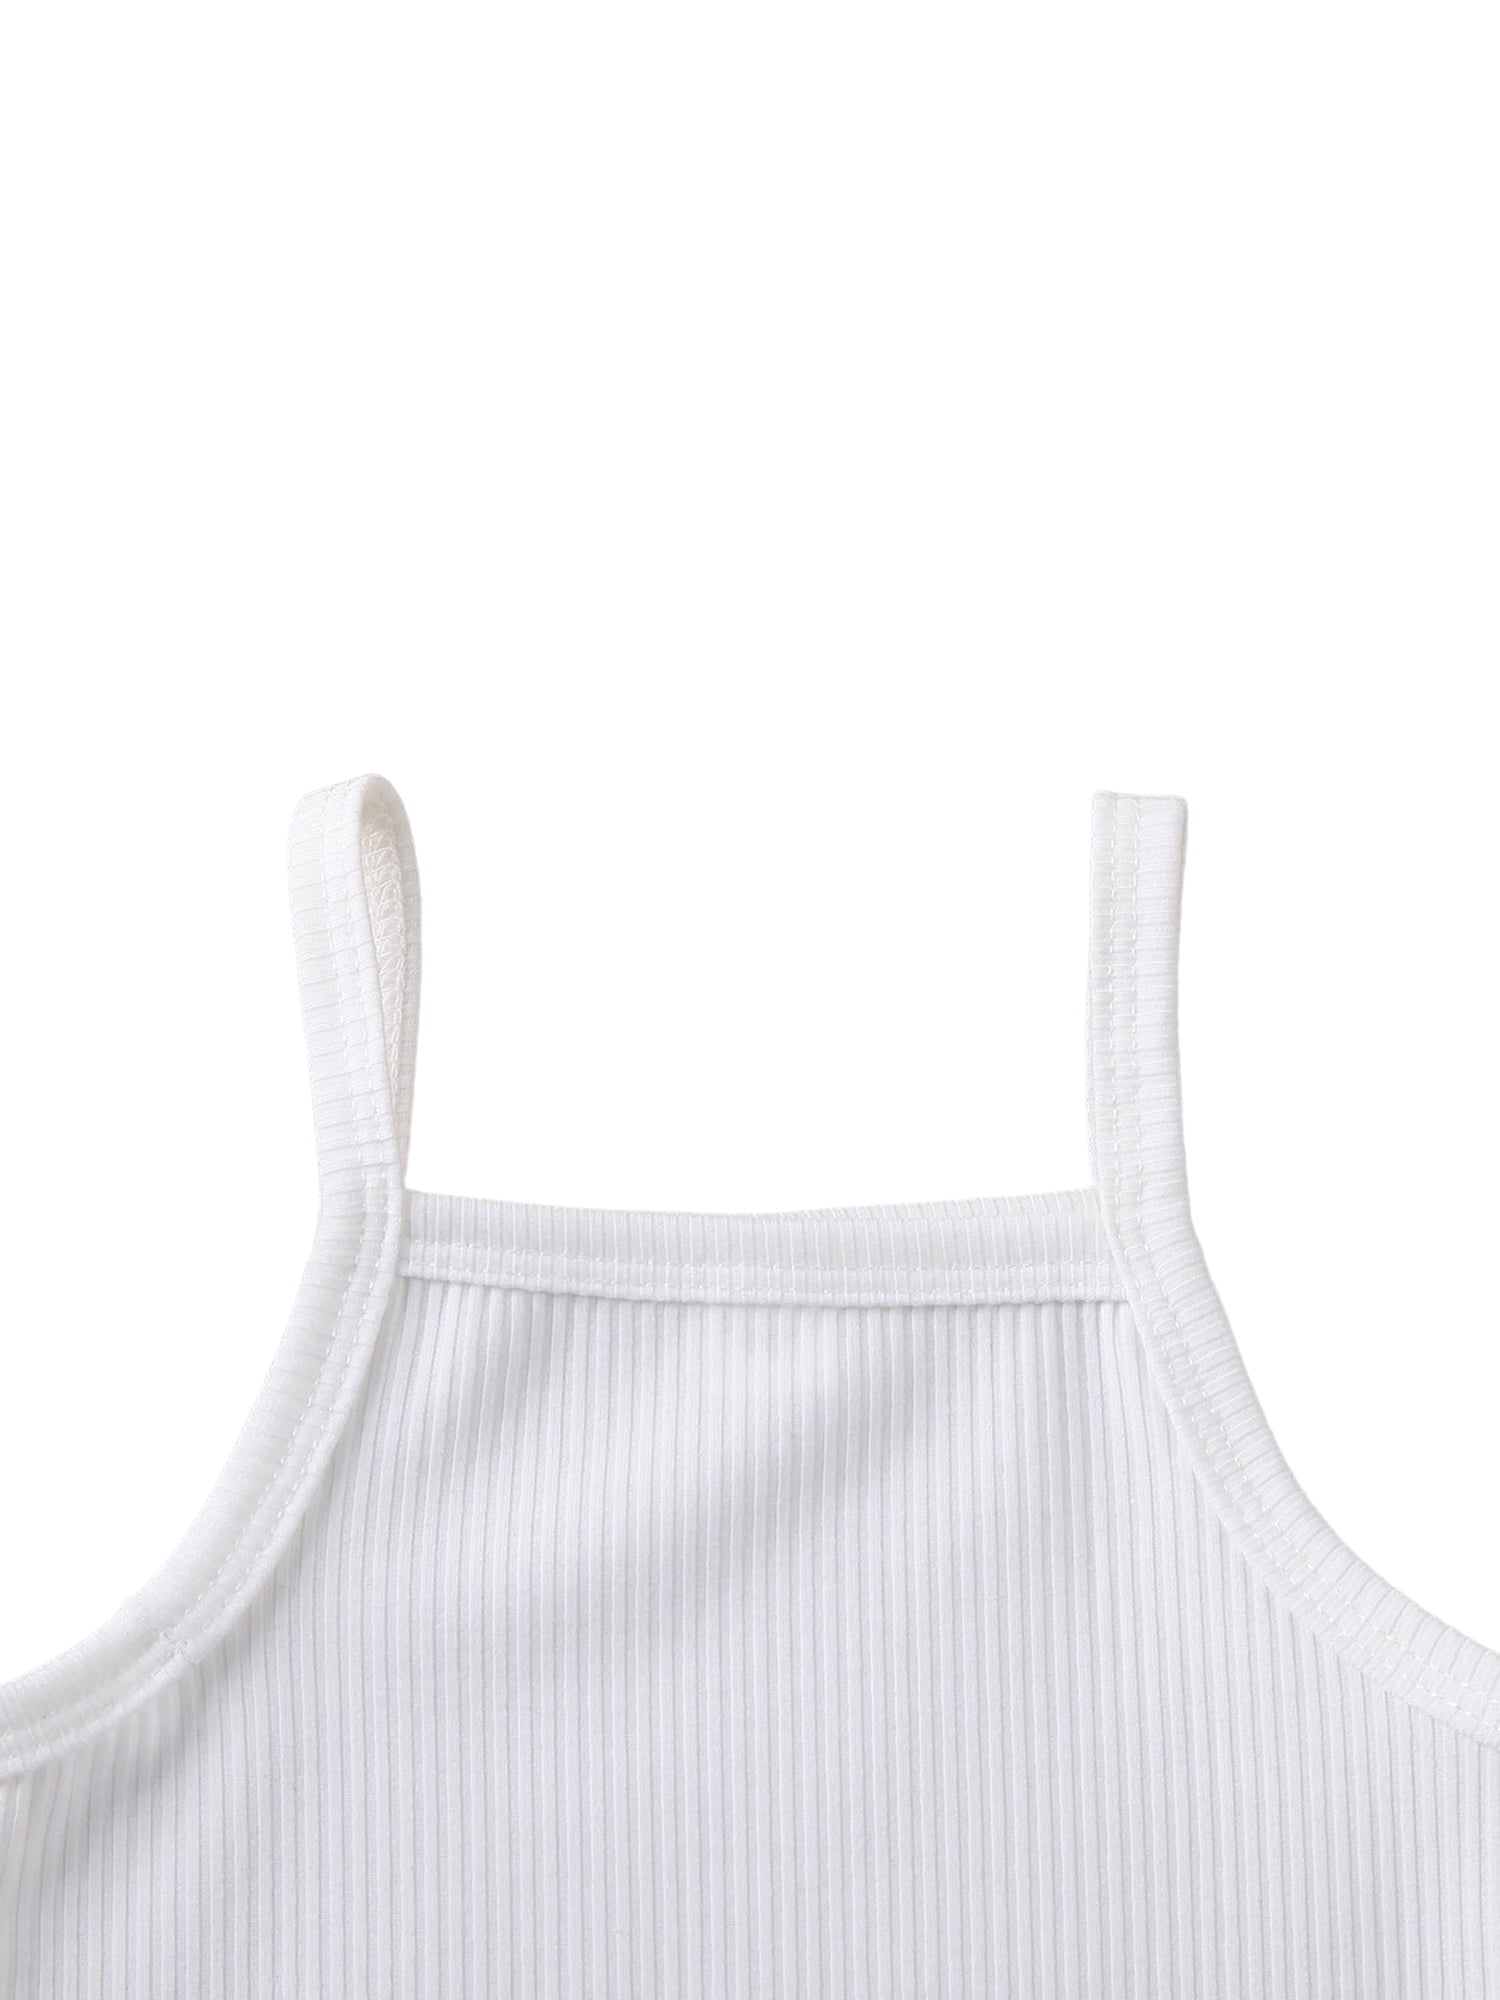 Musuos Baby Camisole Onesie Spaghetti Strap Bodysuit Sleeveless Tank Tops  One-Piece